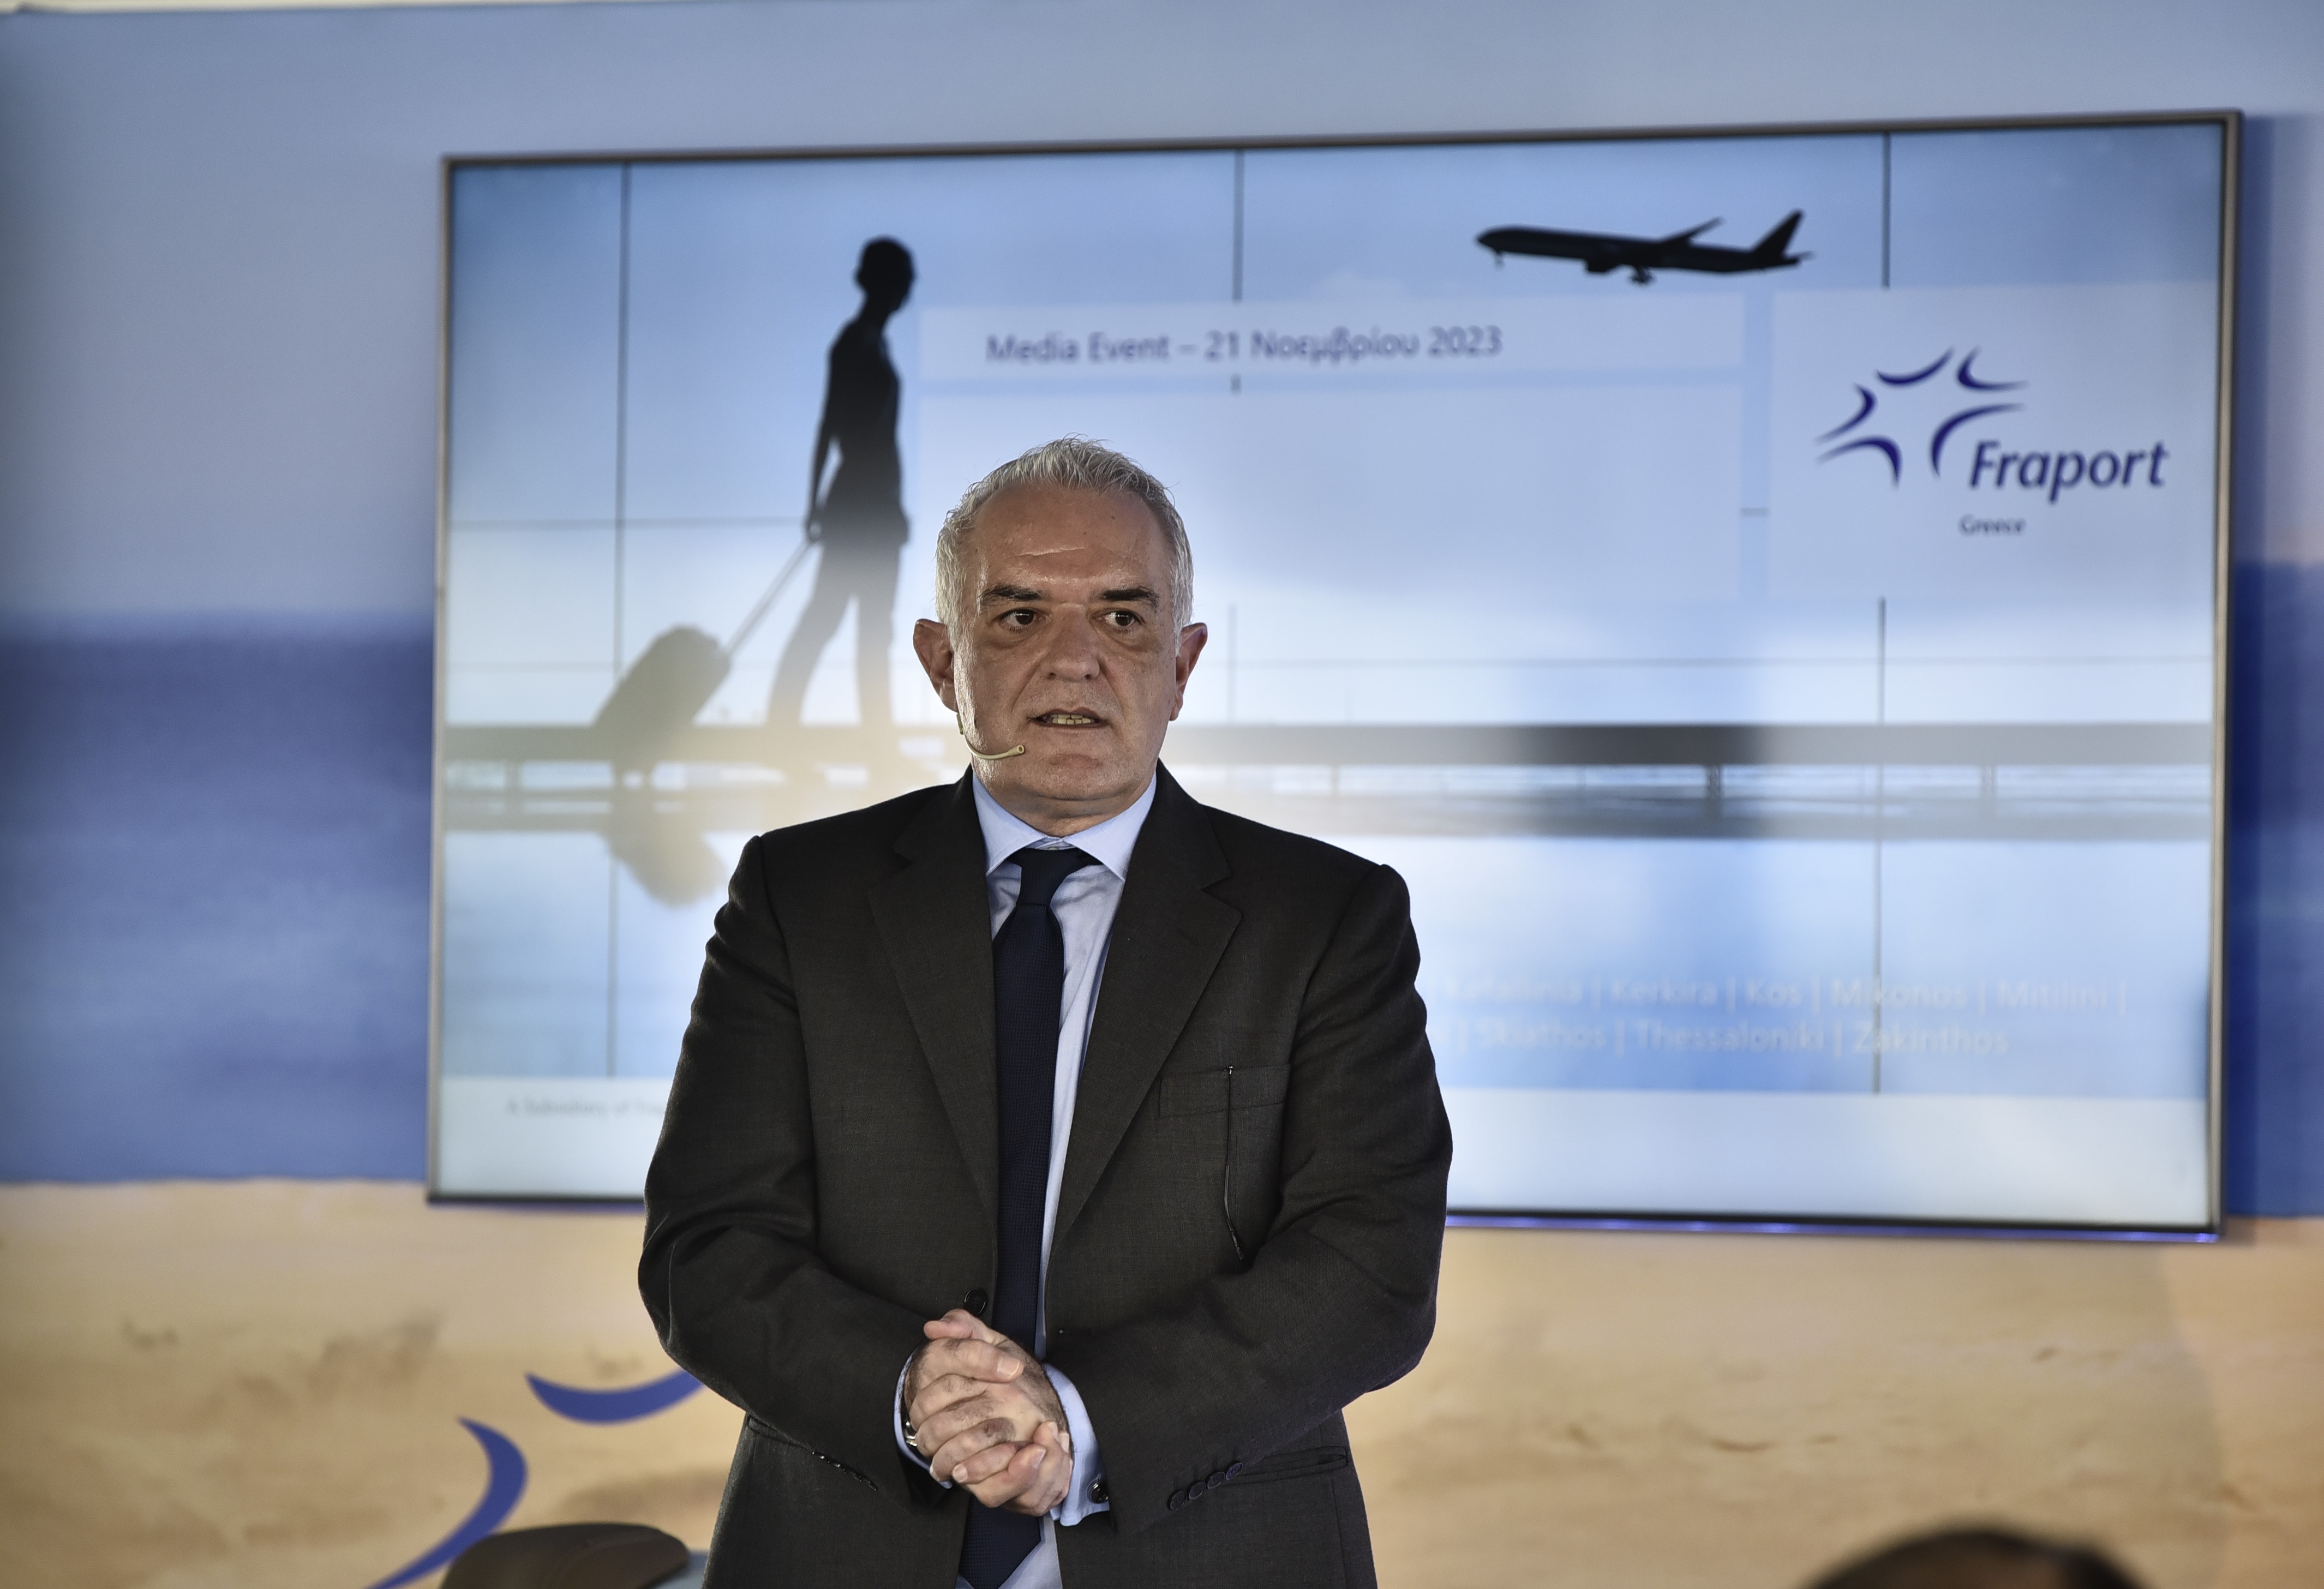 Mr. Savvas Karagiannis, Corporate Communications Manager, Fraport Greece